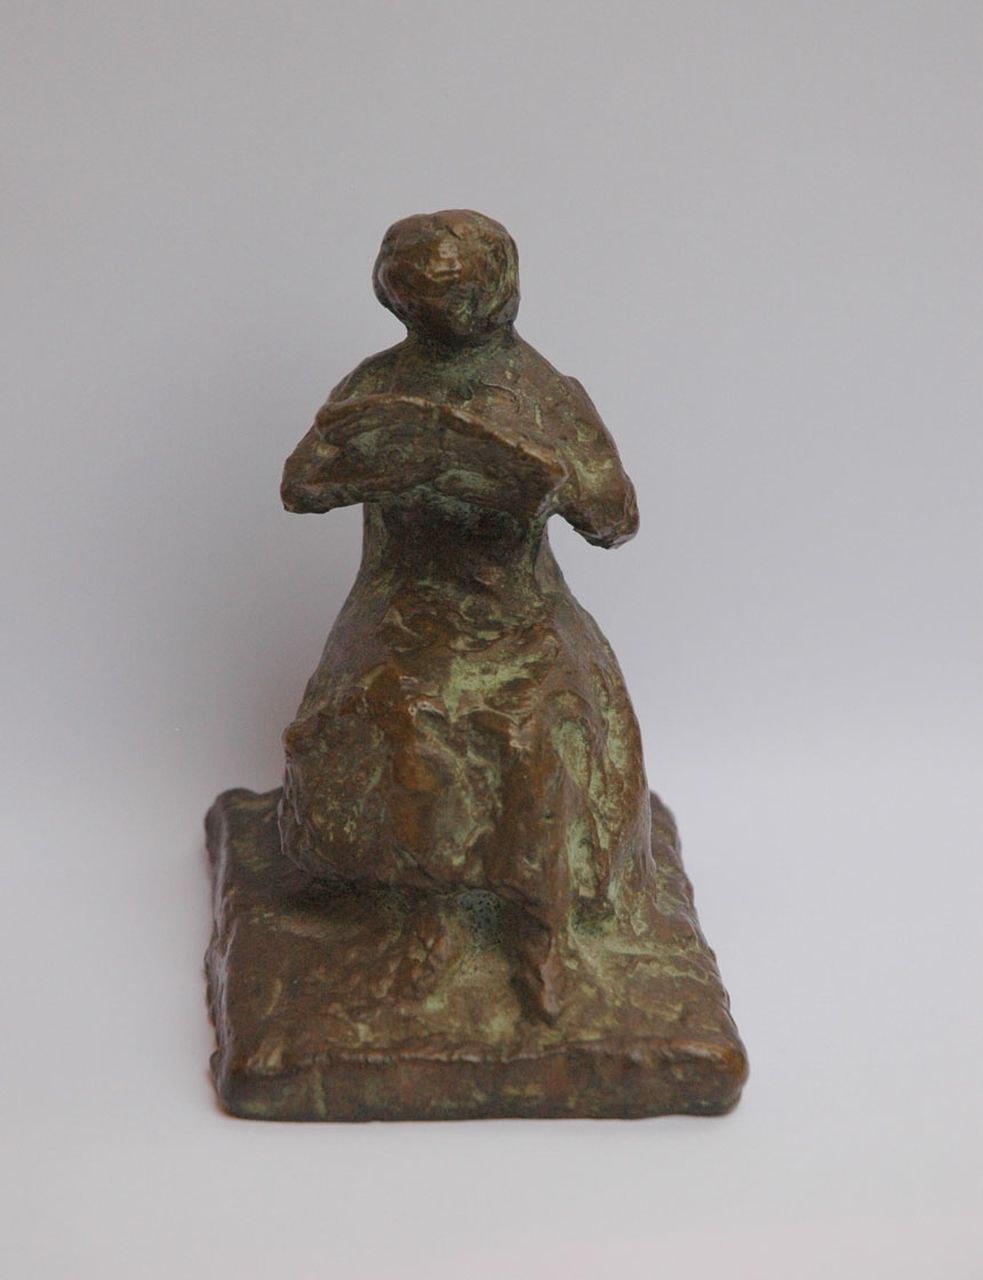 Rueter G.  | Gerarda Rueter, Zittende vrouw, lezend, brons 10,6 x 7,4 cm